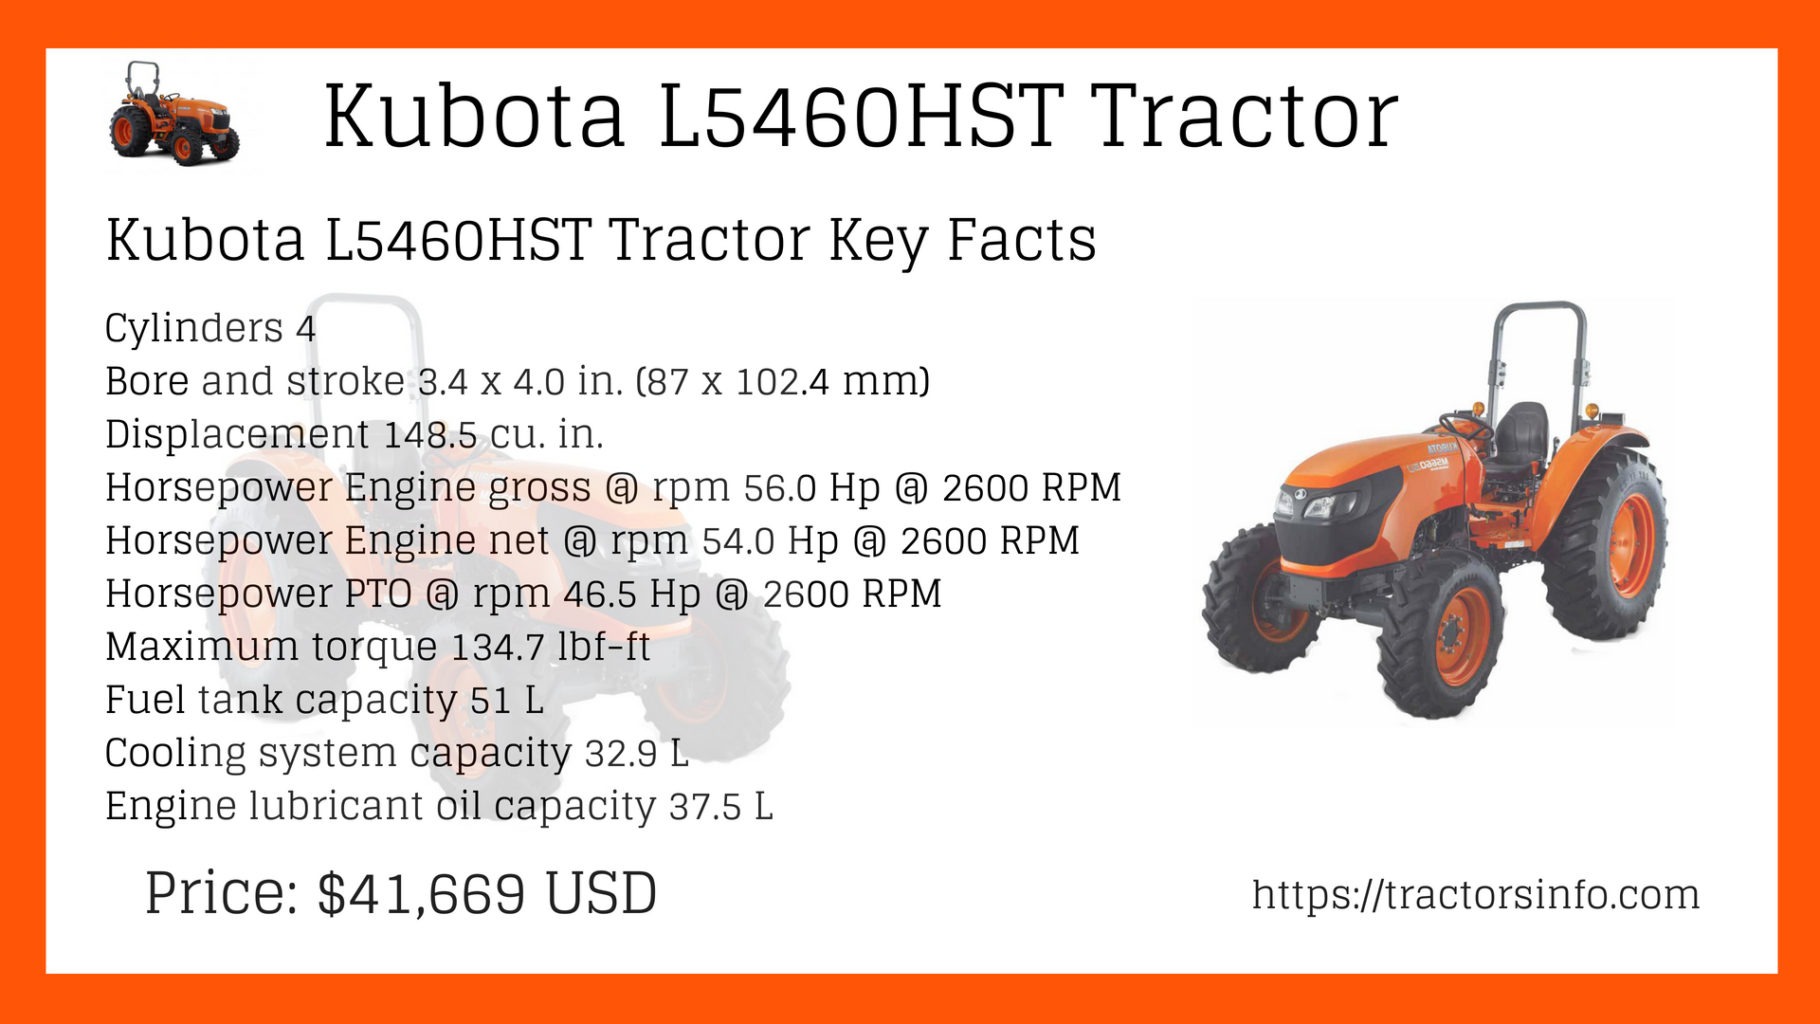 Kubota L5460HST Tractor